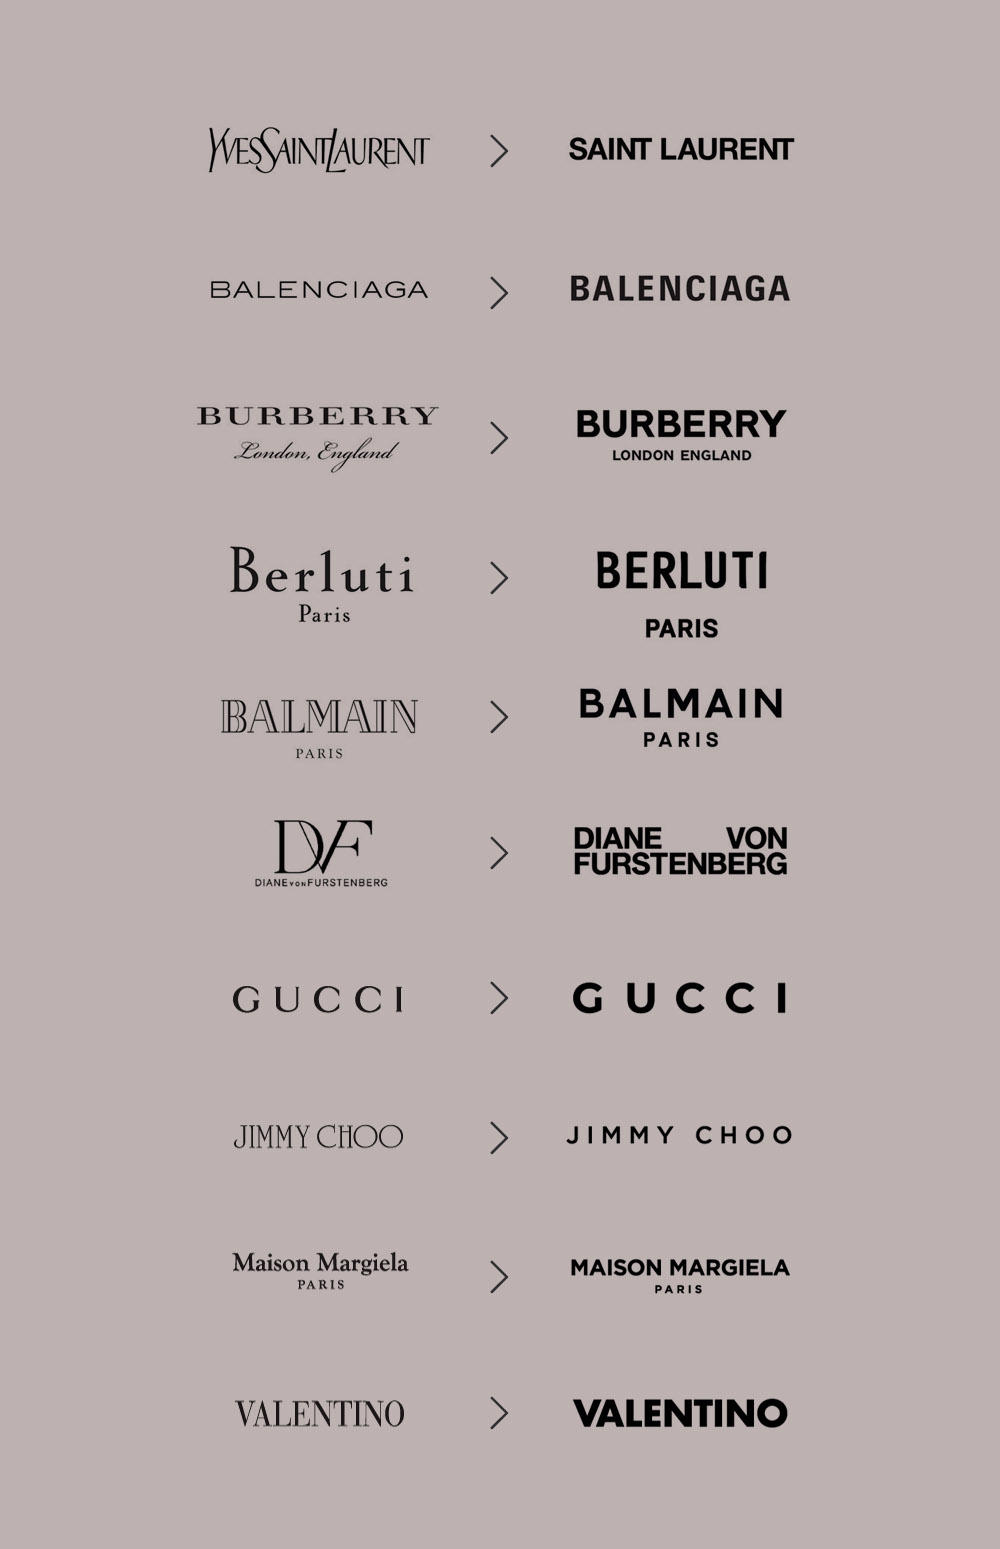 luxury fashion brand logo ideas  Fashion logo branding, Clothing brand  logos, Fashion logo typography